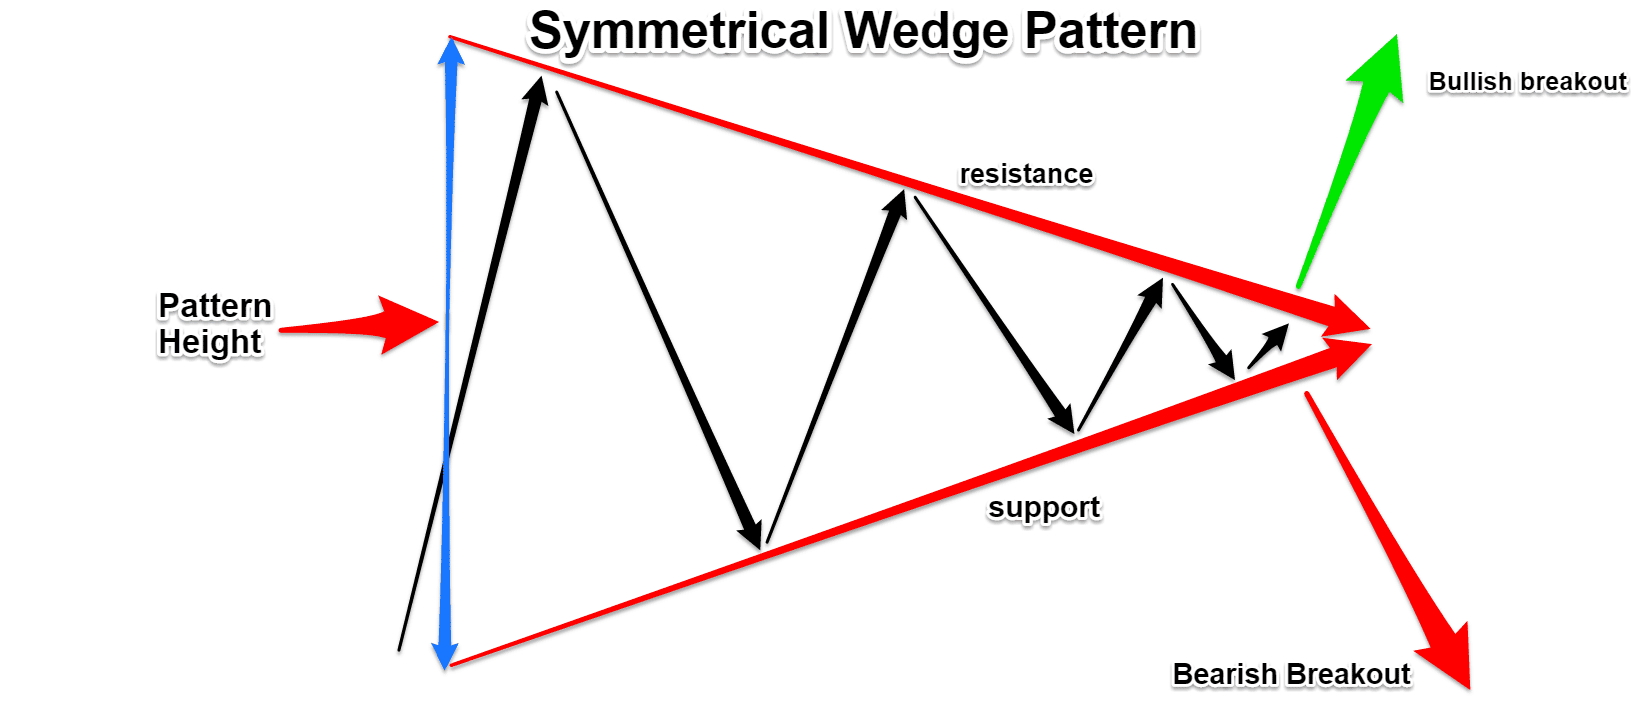 Symmetrical Wedge Pattern